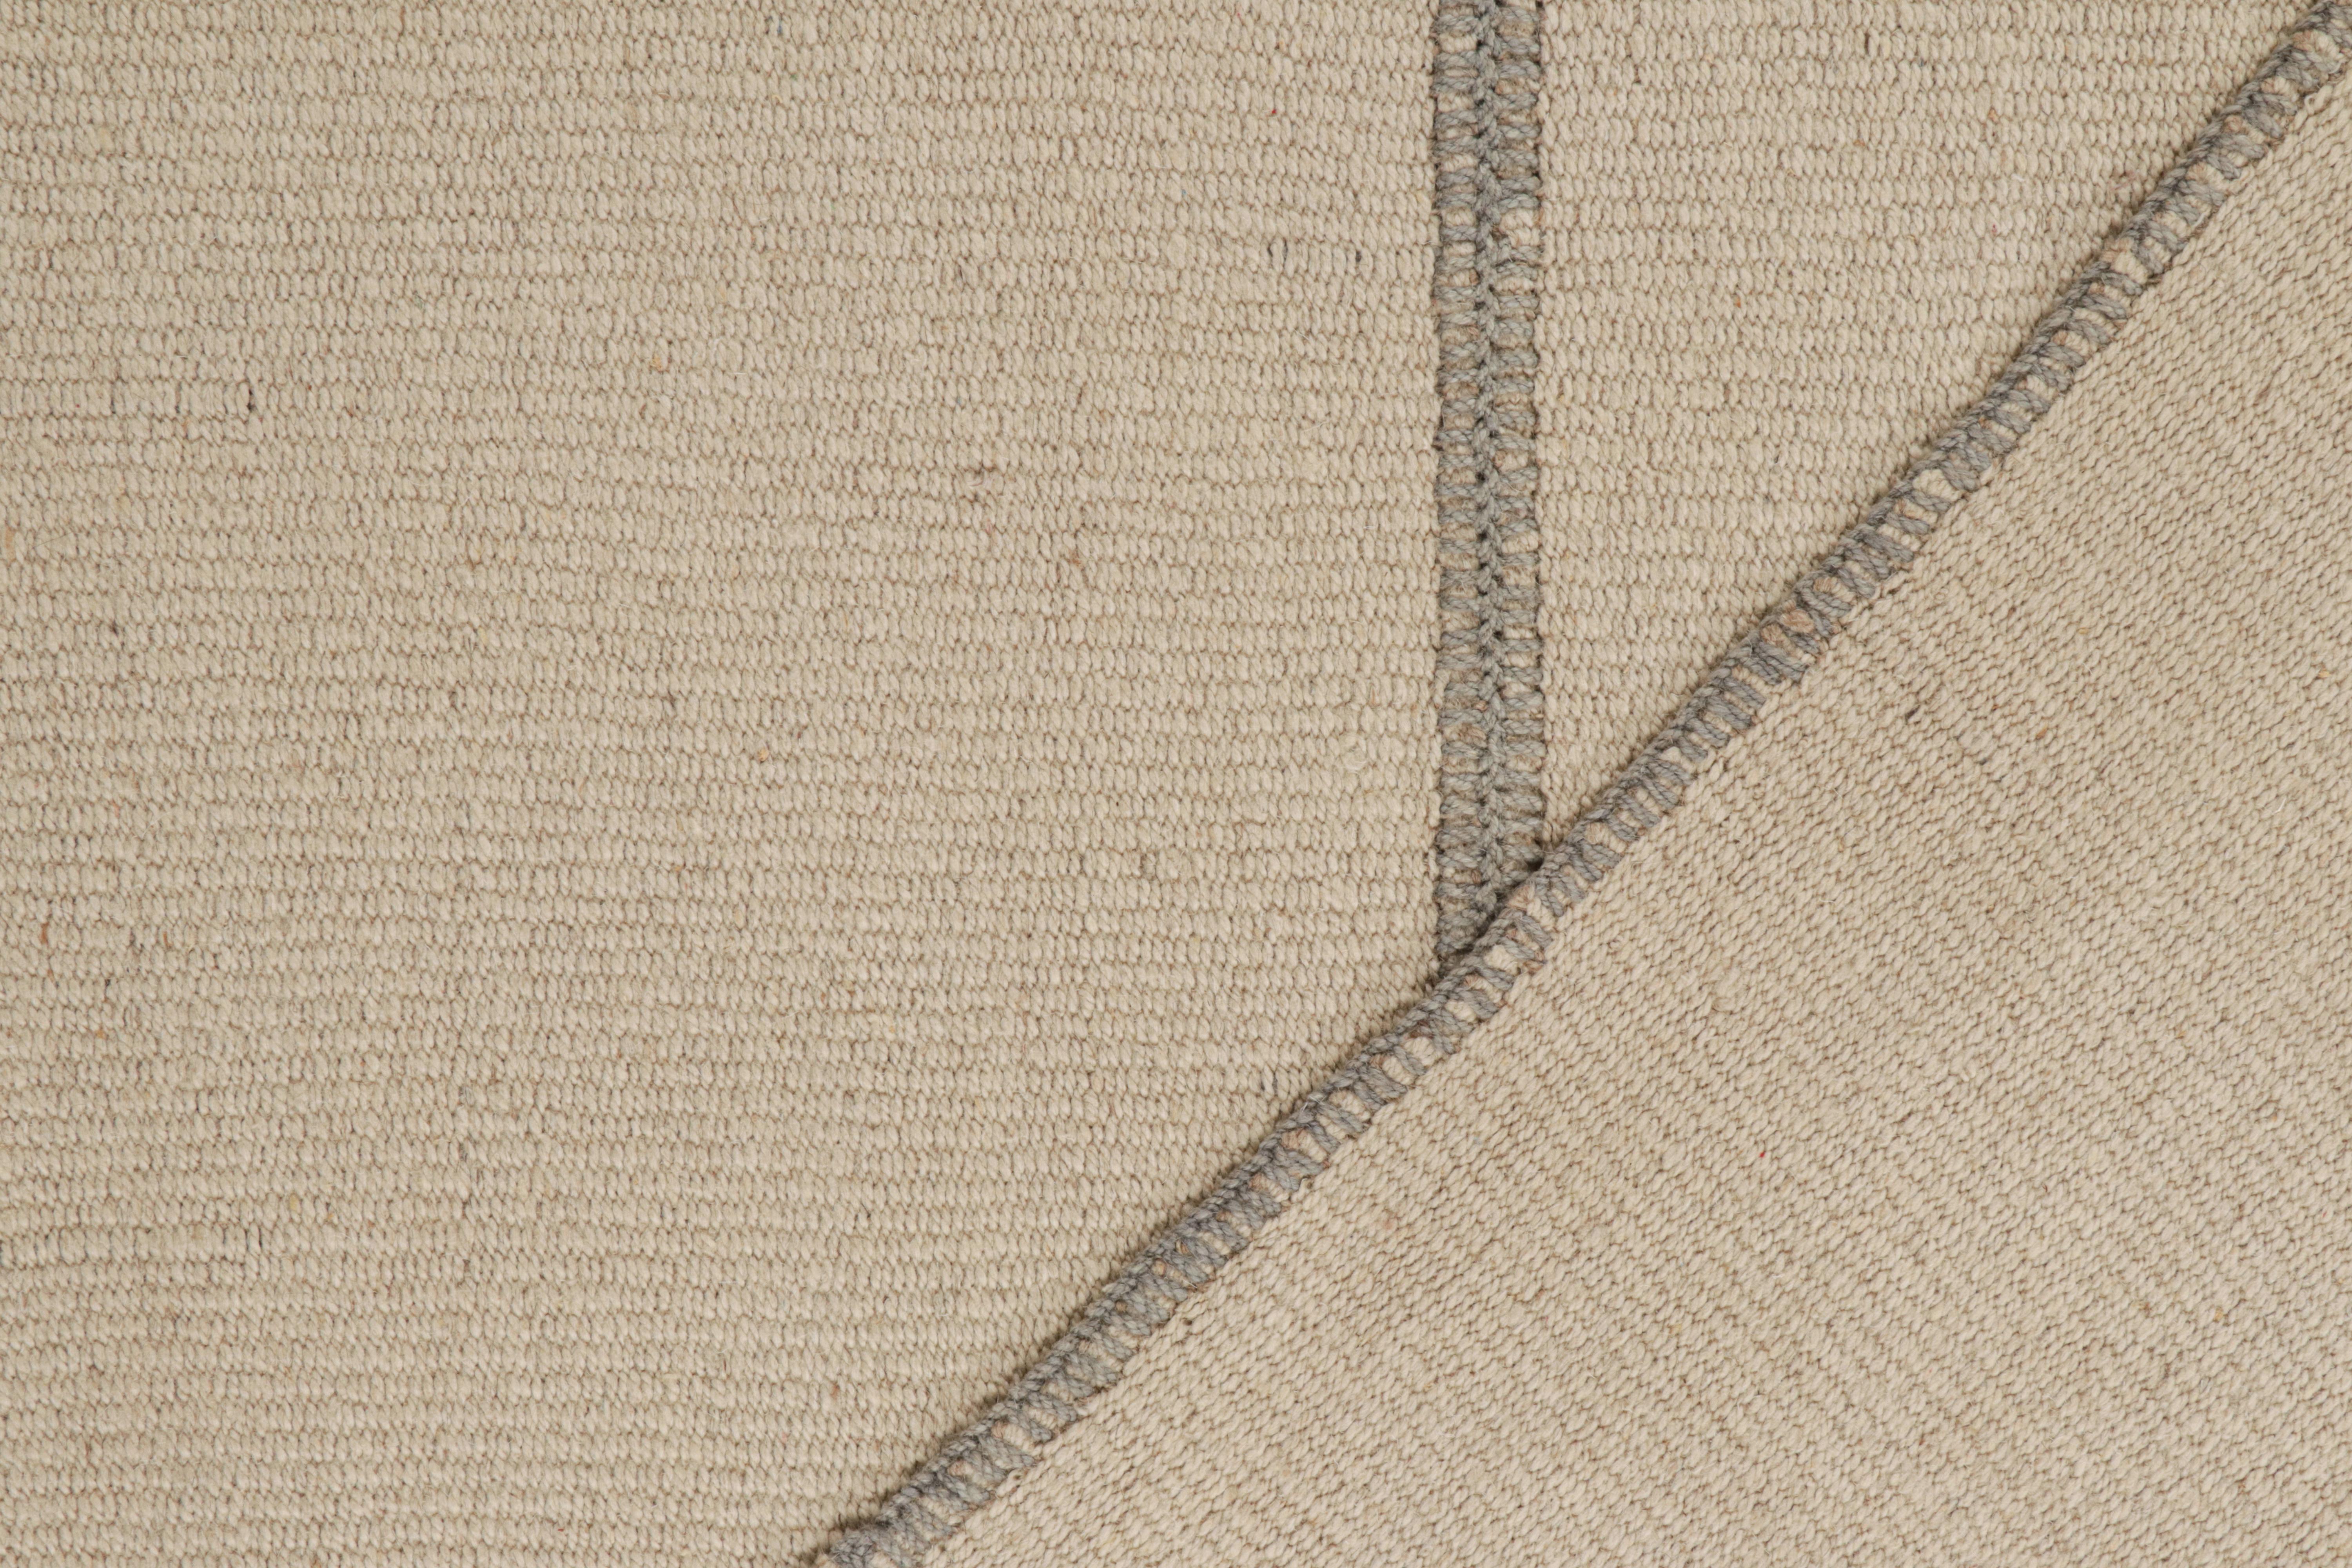 Wool Rug & Kilim’s Contemporary Kilim in Beige & Grey Stripes For Sale